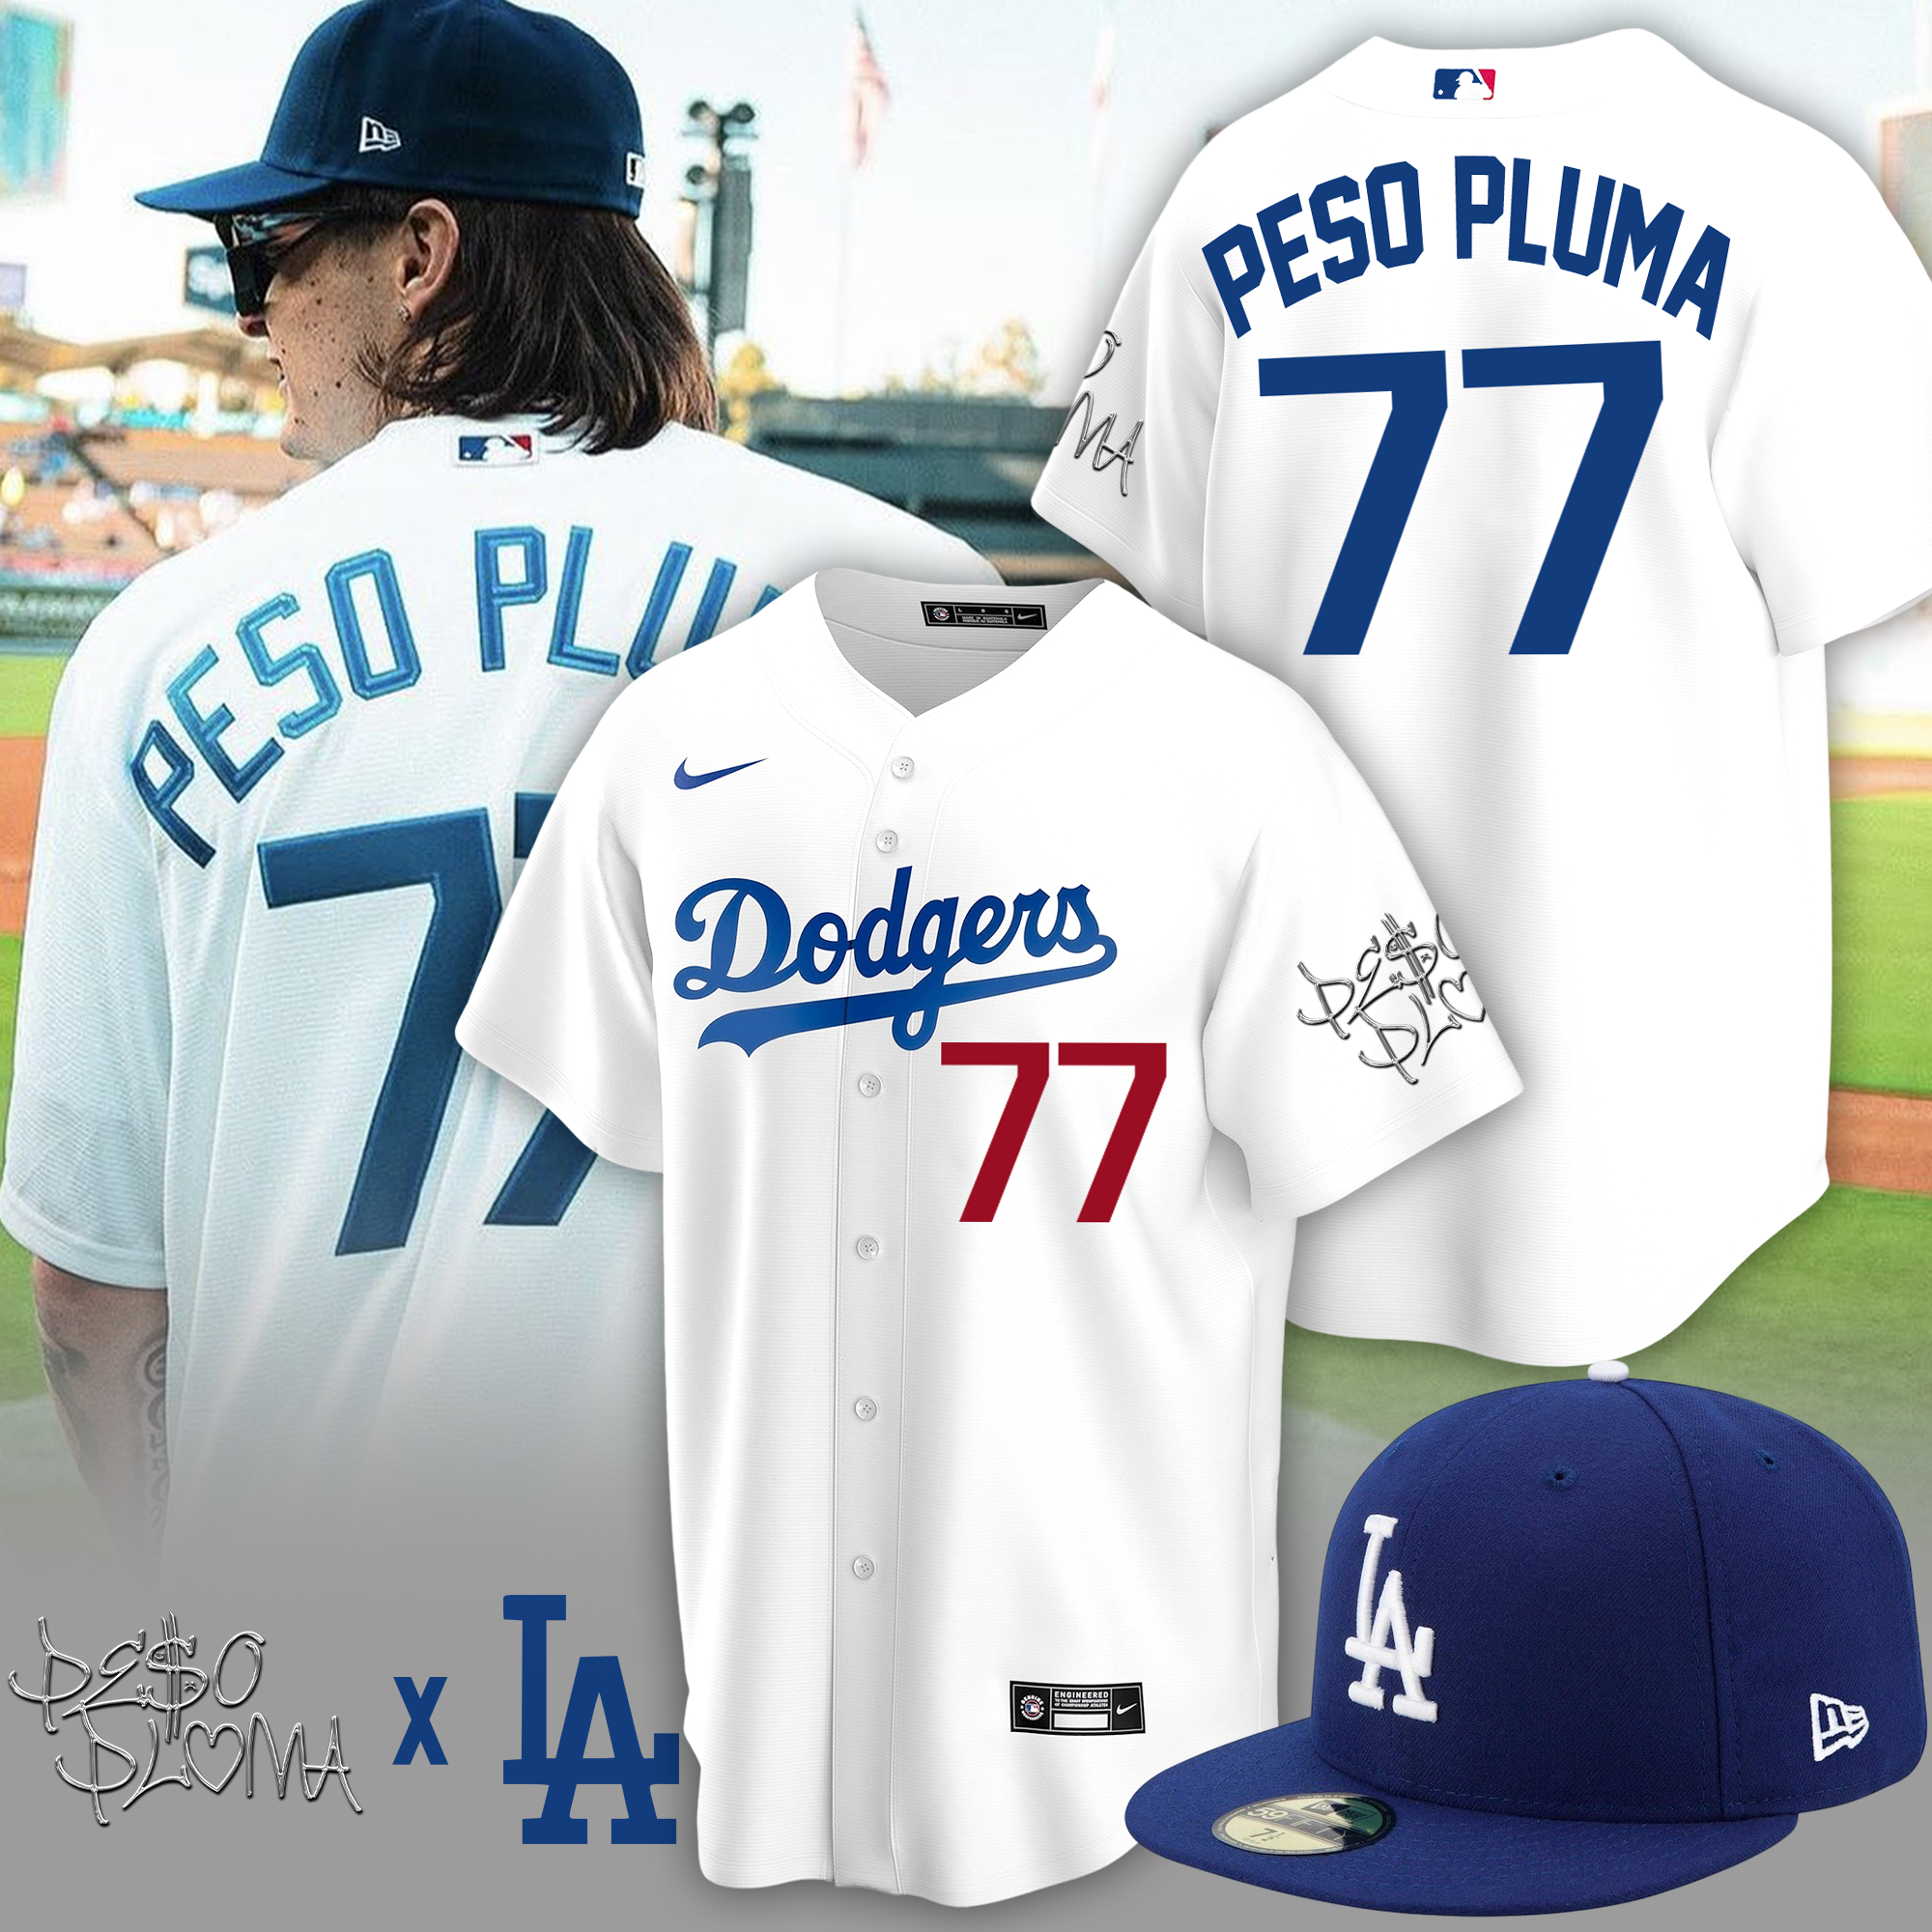 Peso Pluma Los Angeles Dodgers Mexico Baseball Jersey - Kokfashion